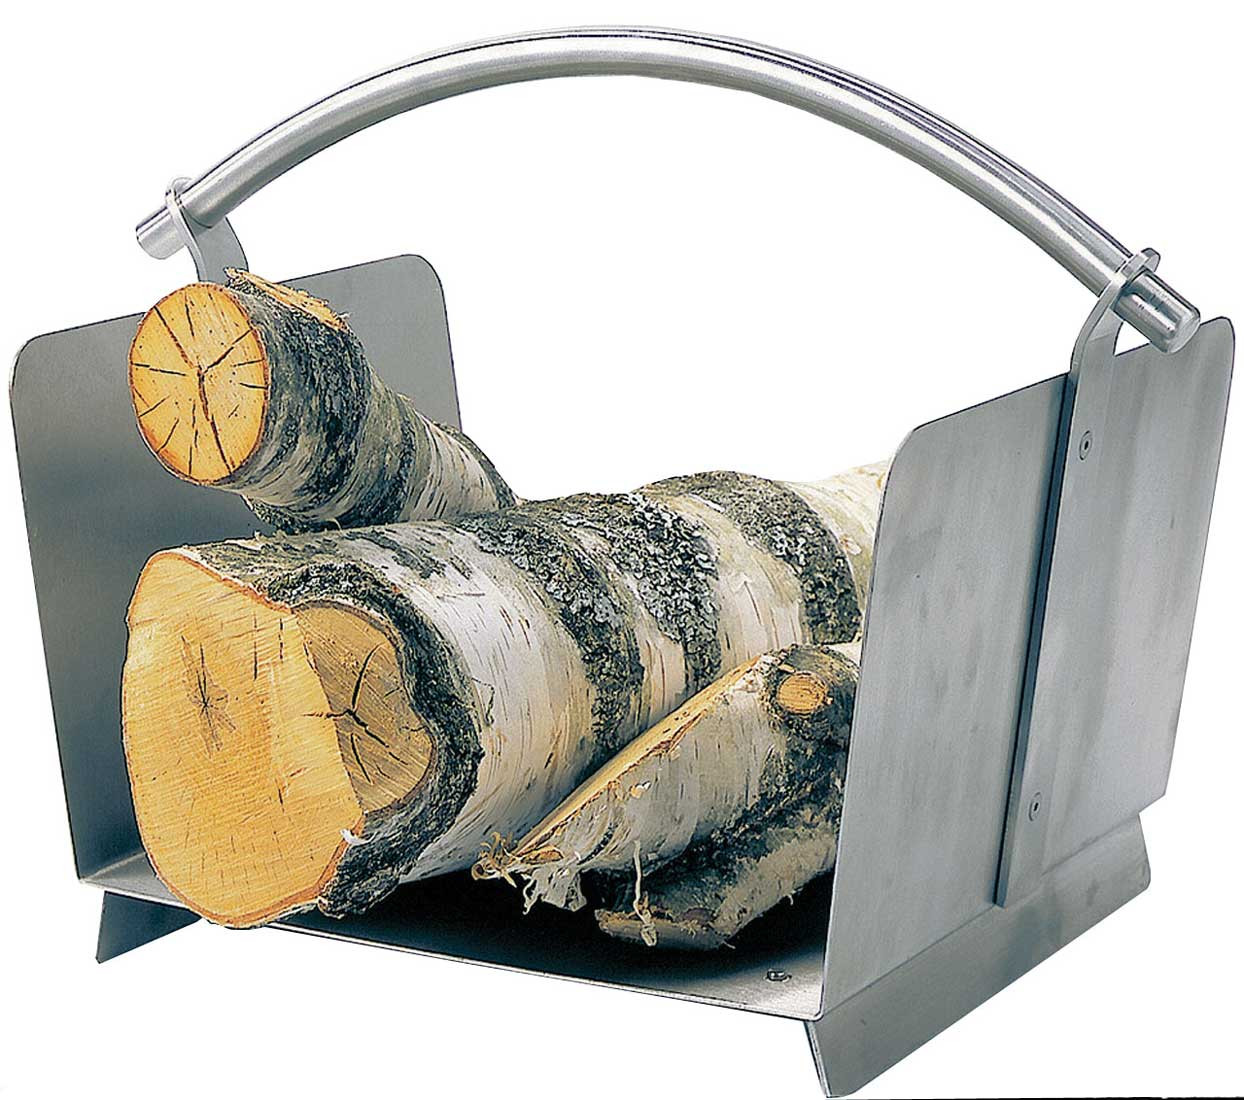 Holzkorb Lienbacher aus Edelstahl, matt gebürstet